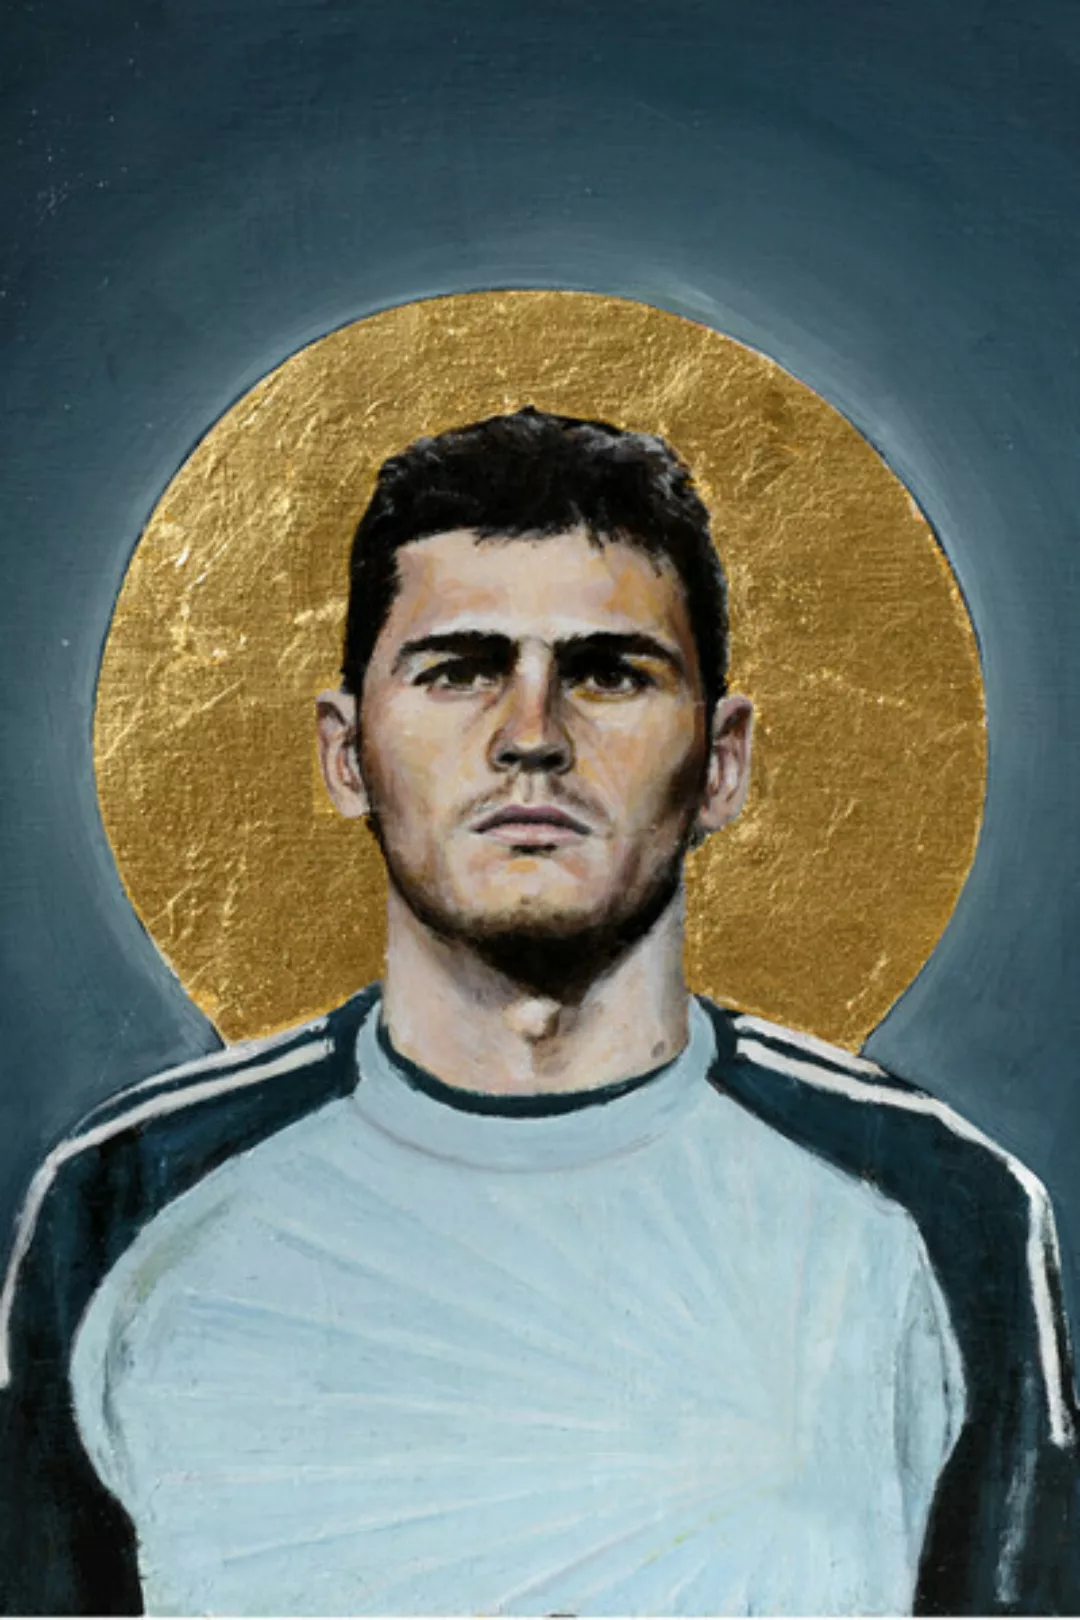 Poster / Leinwandbild - Iker Casillas günstig online kaufen